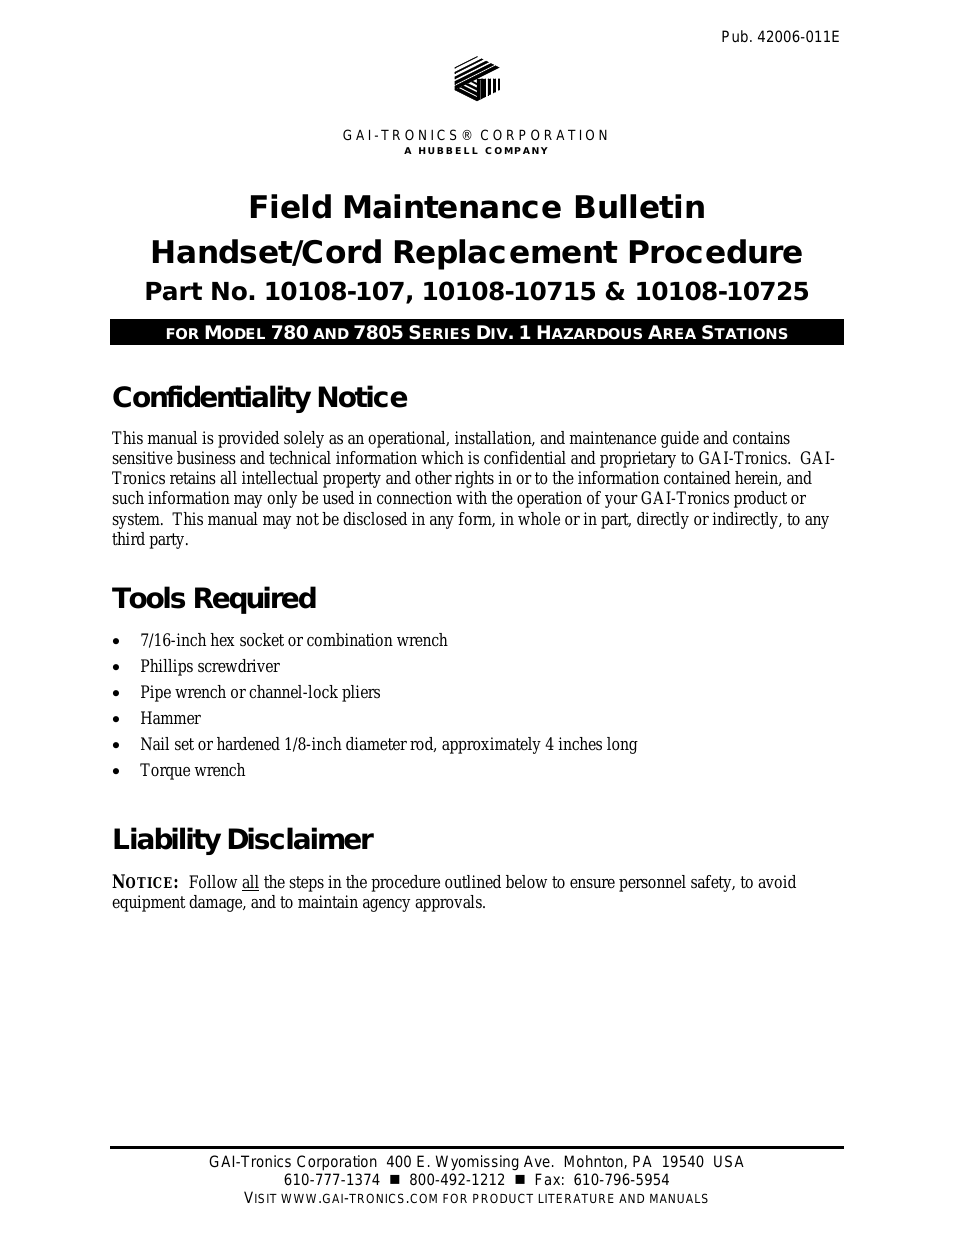 10108-008 Field Maintenance Bulletin: Handset/Cord Replacement Procedure for Model 780 & 7805 Series Div. 1 Hazardous Area Stations